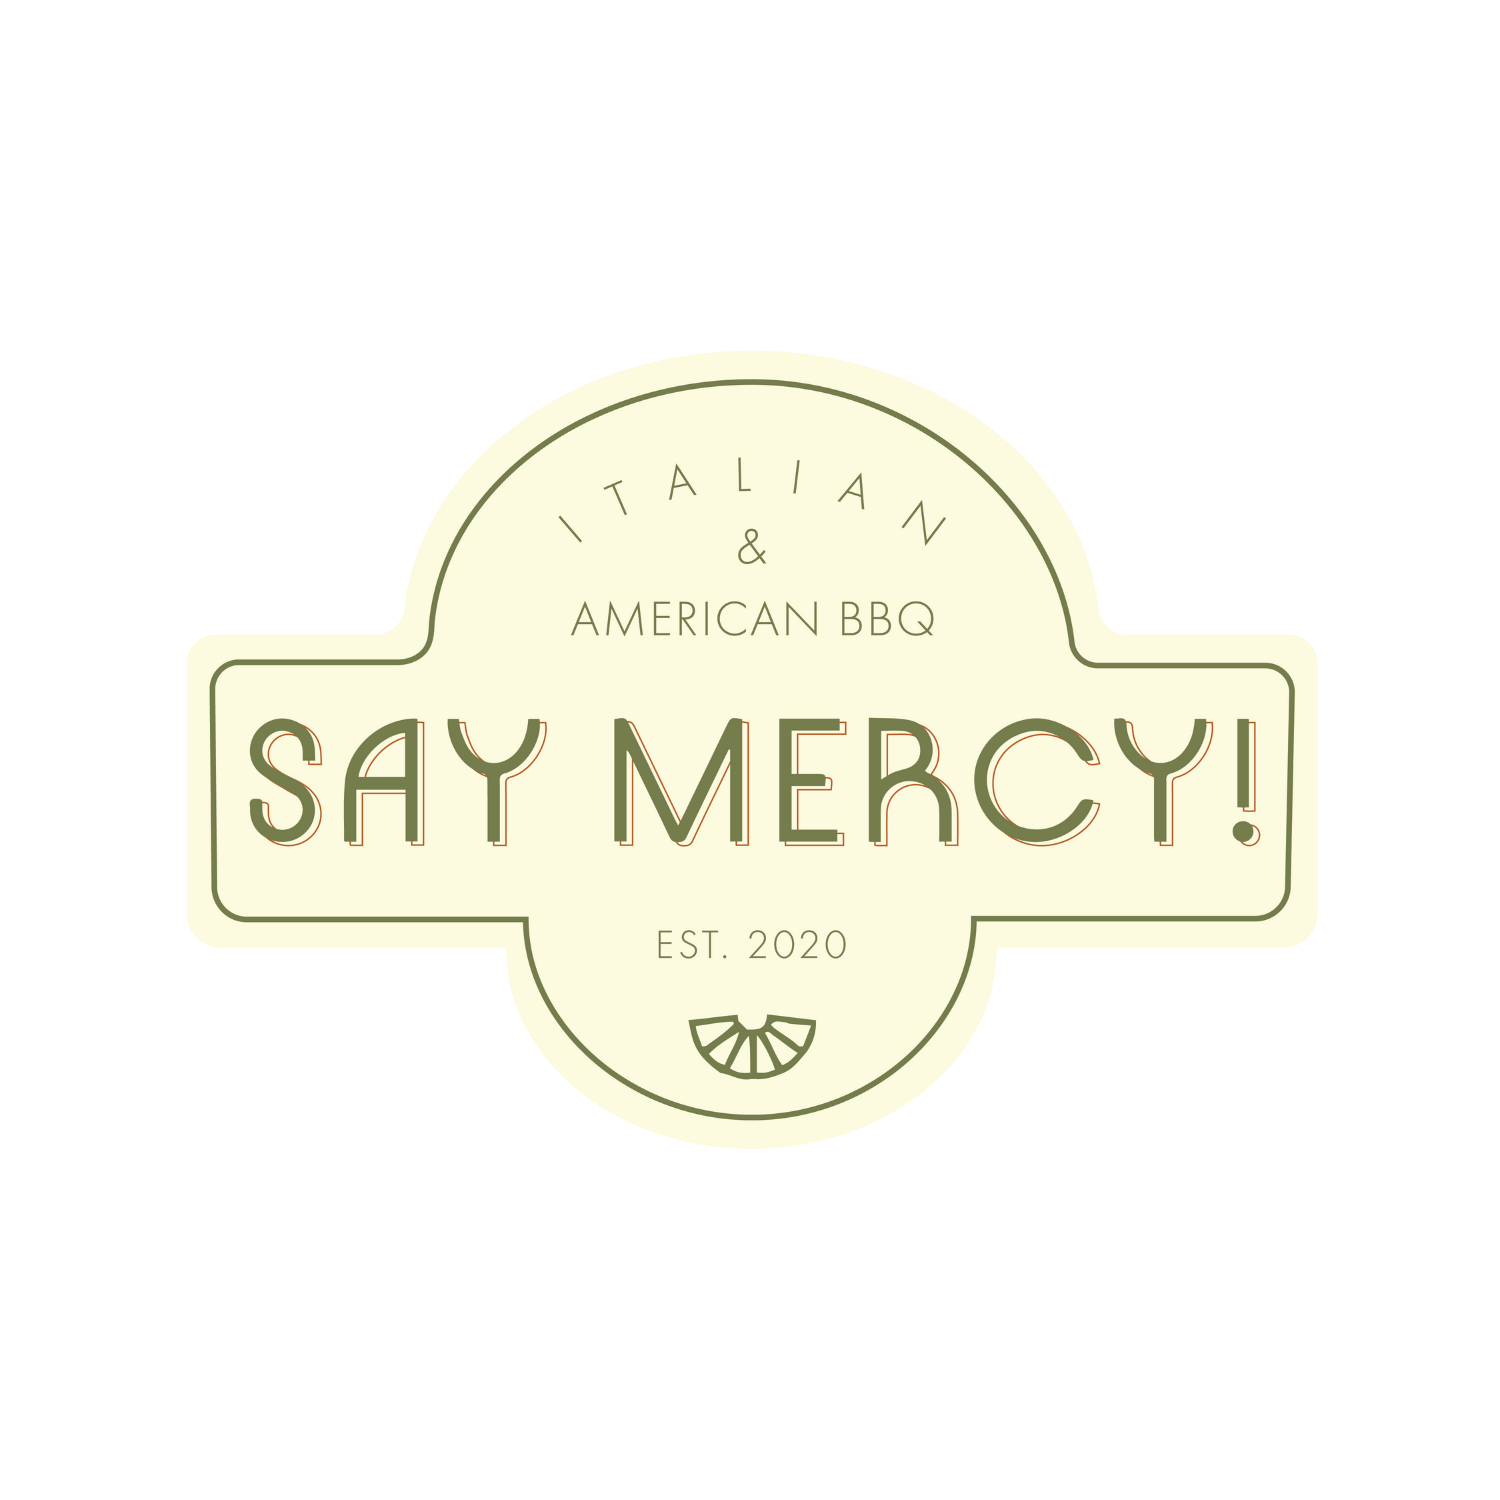 Say Mercy!